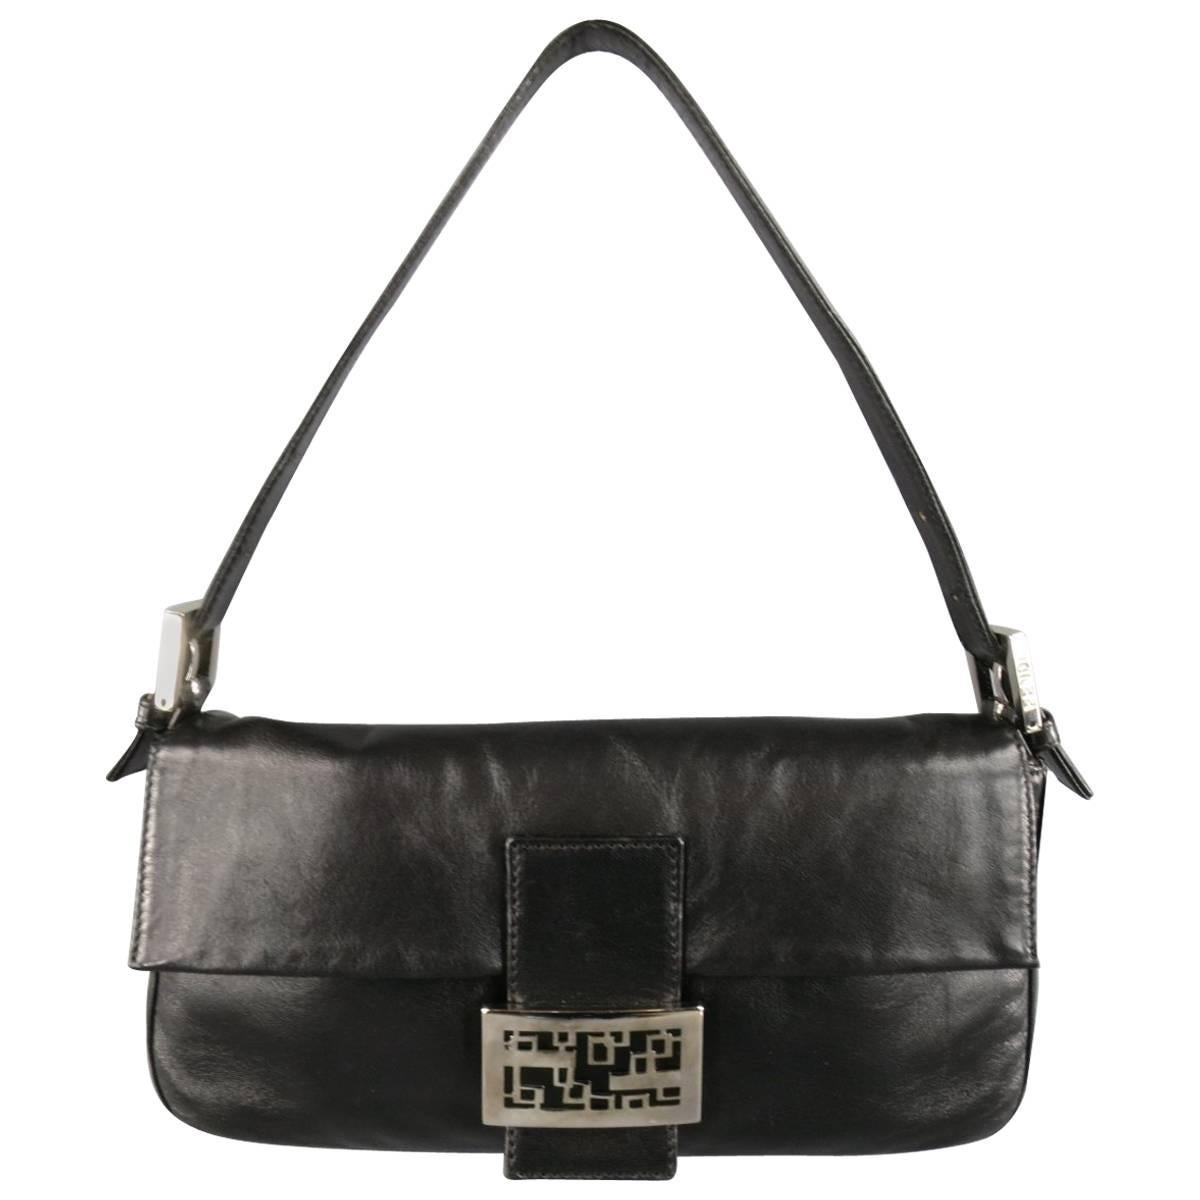 FENDI Handbag - Black Leather Handbag